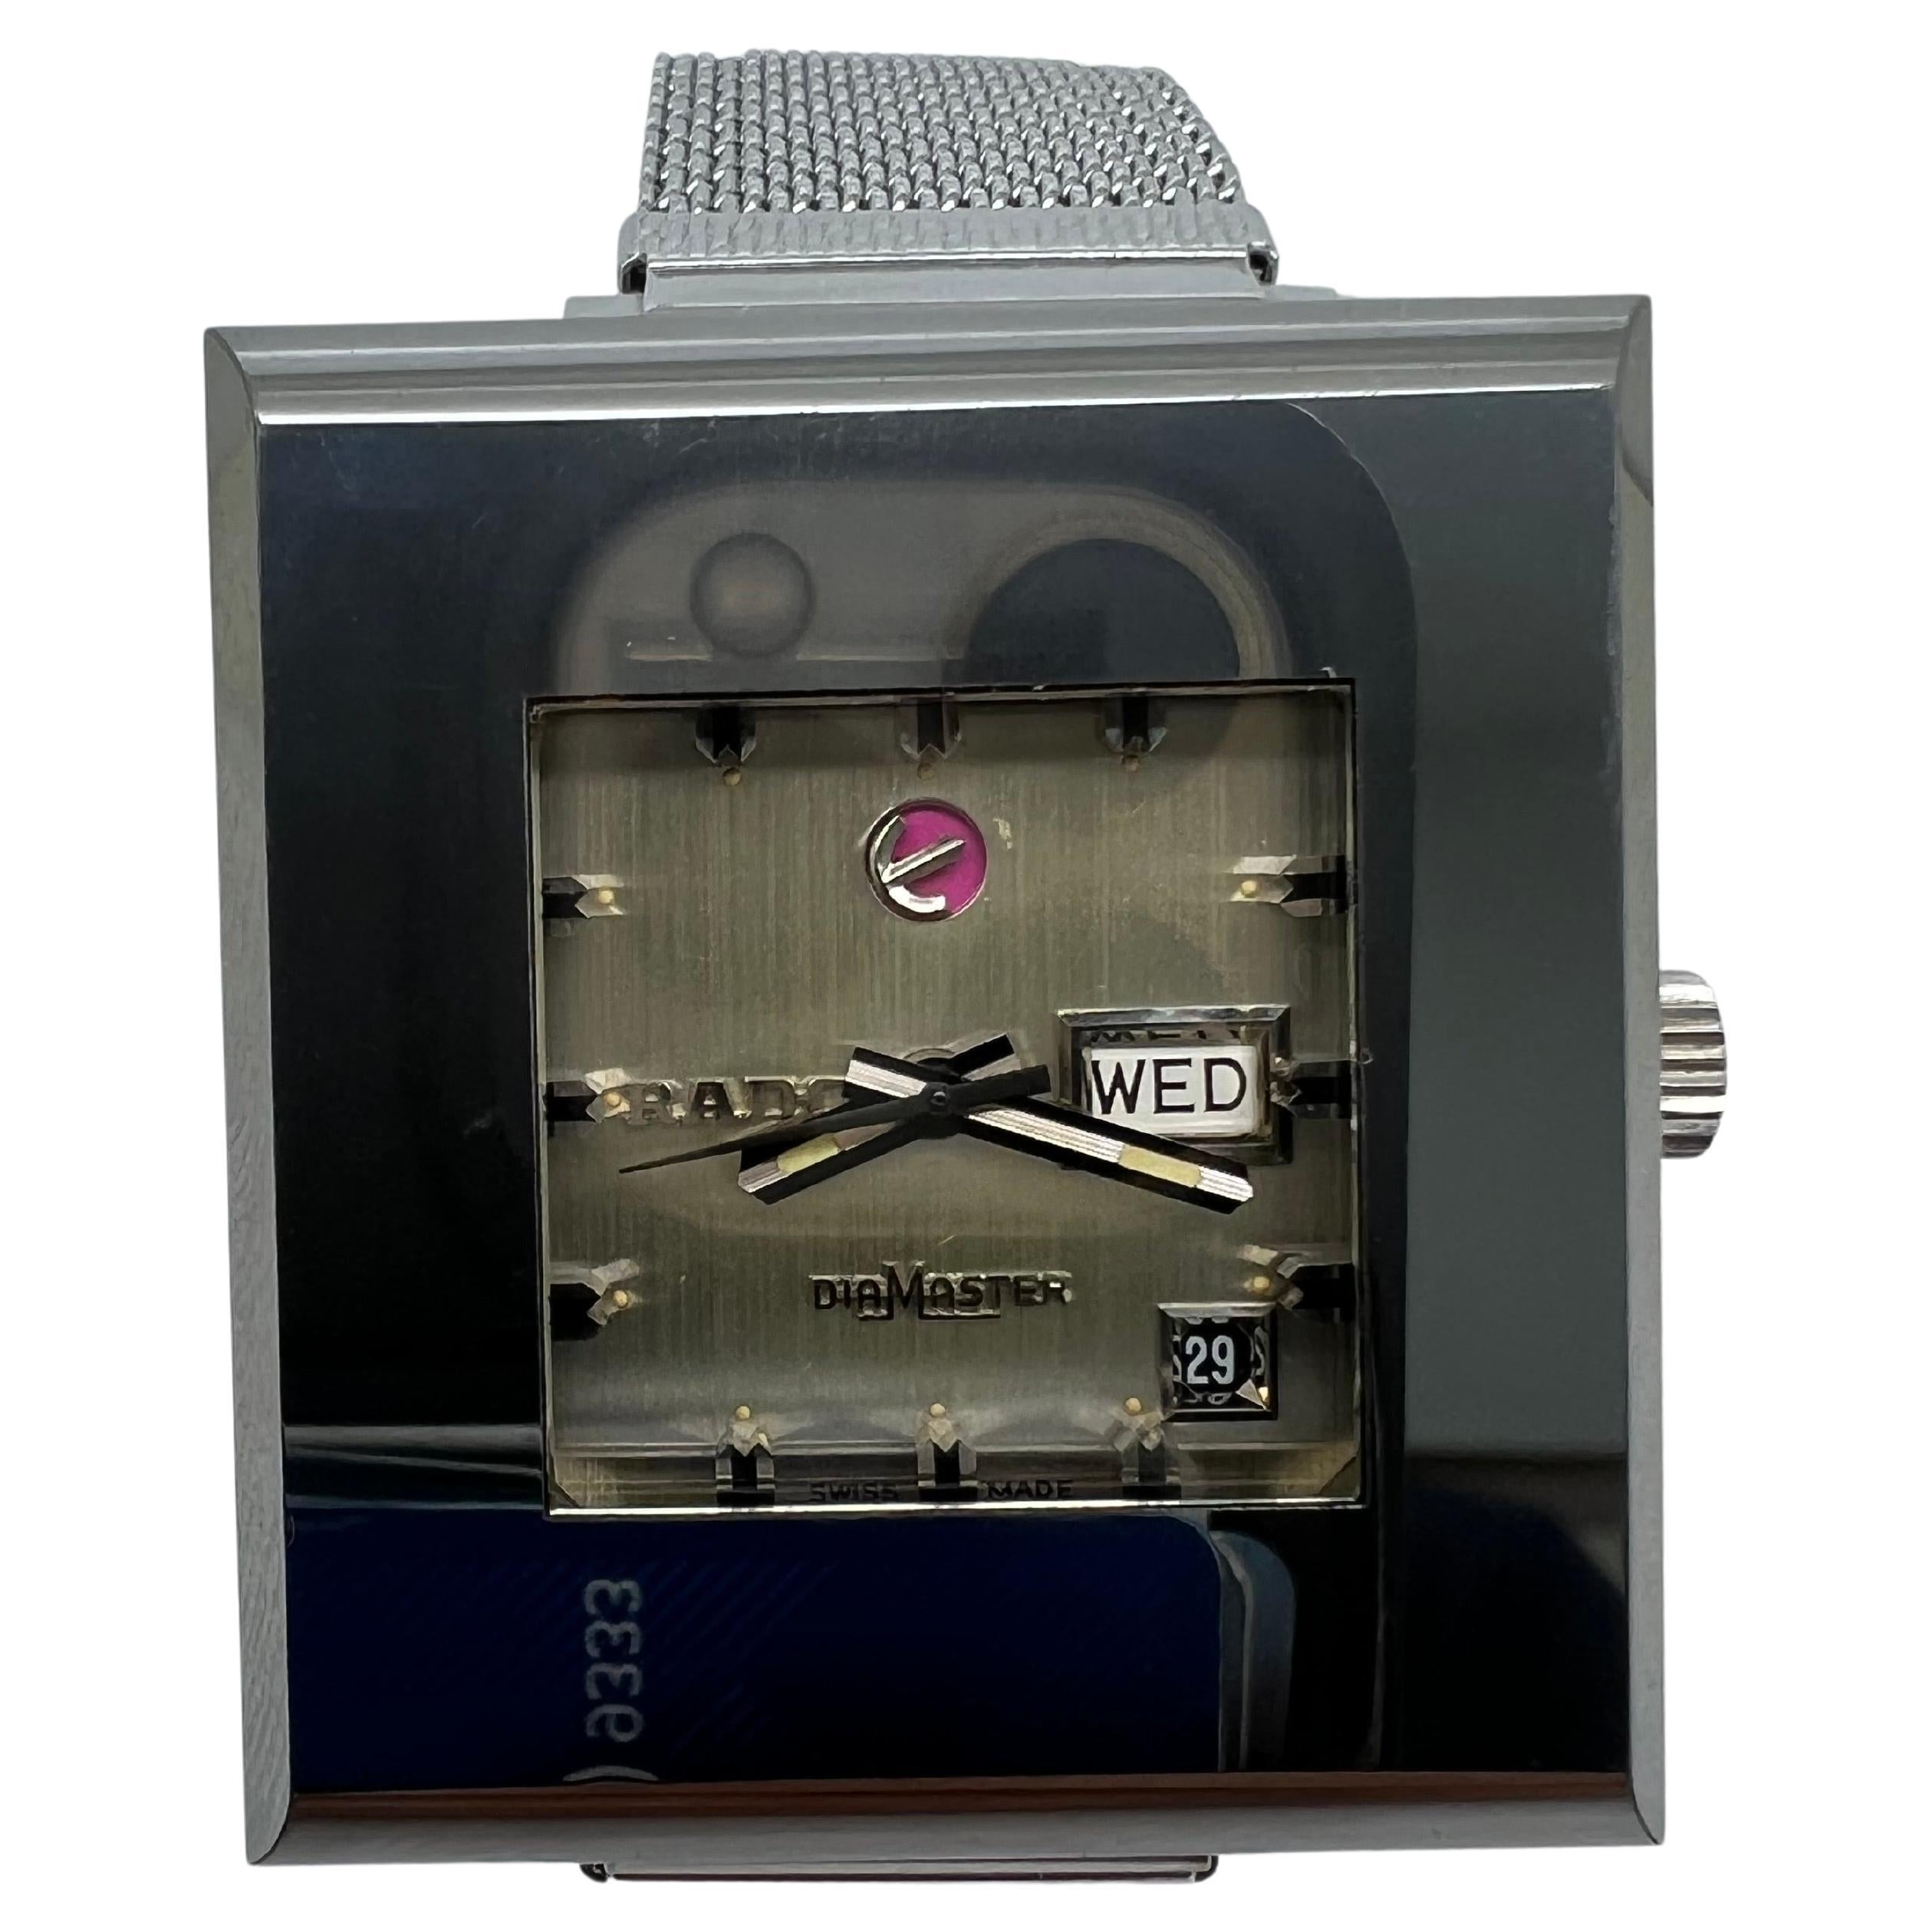 Rado DiaMaster 10 Tumgsten Case Scratchproof Vintage Watch Rare!! For Sale